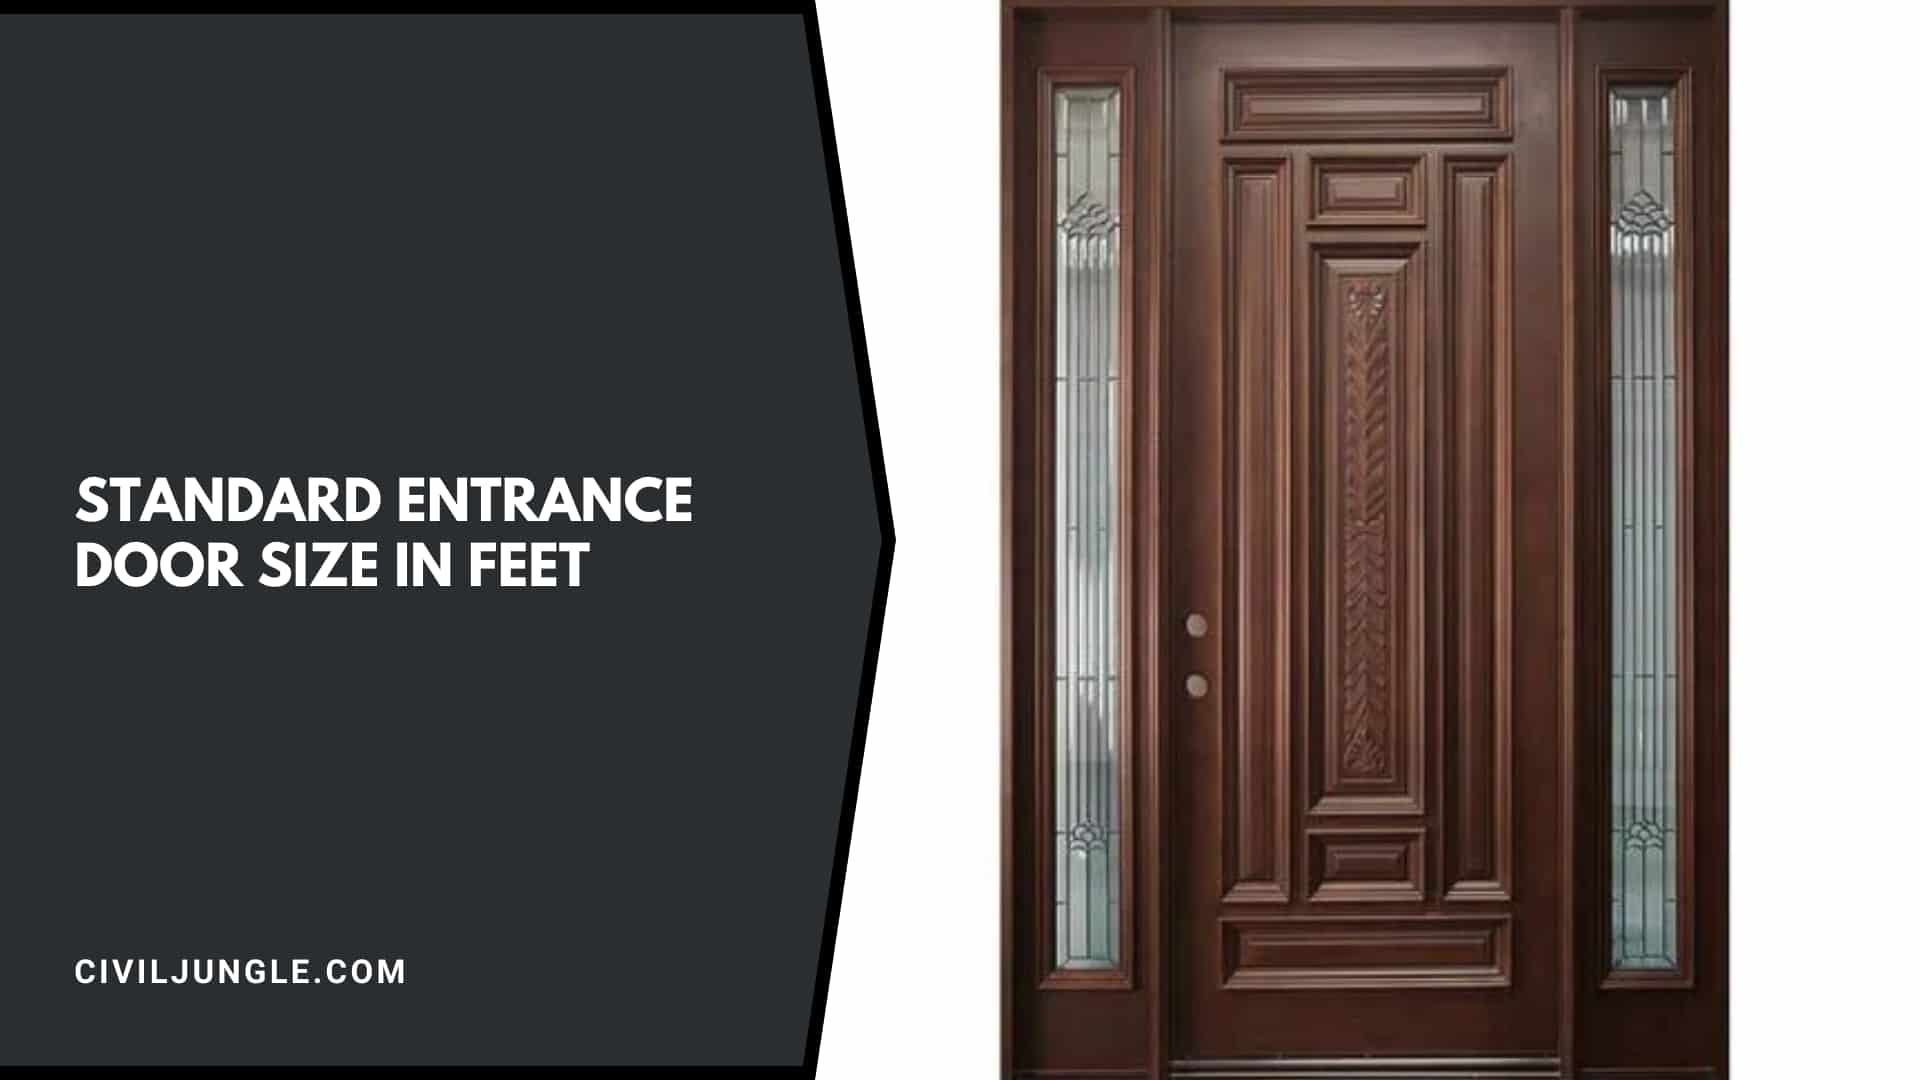 Standard Entrance Door Size in Feet